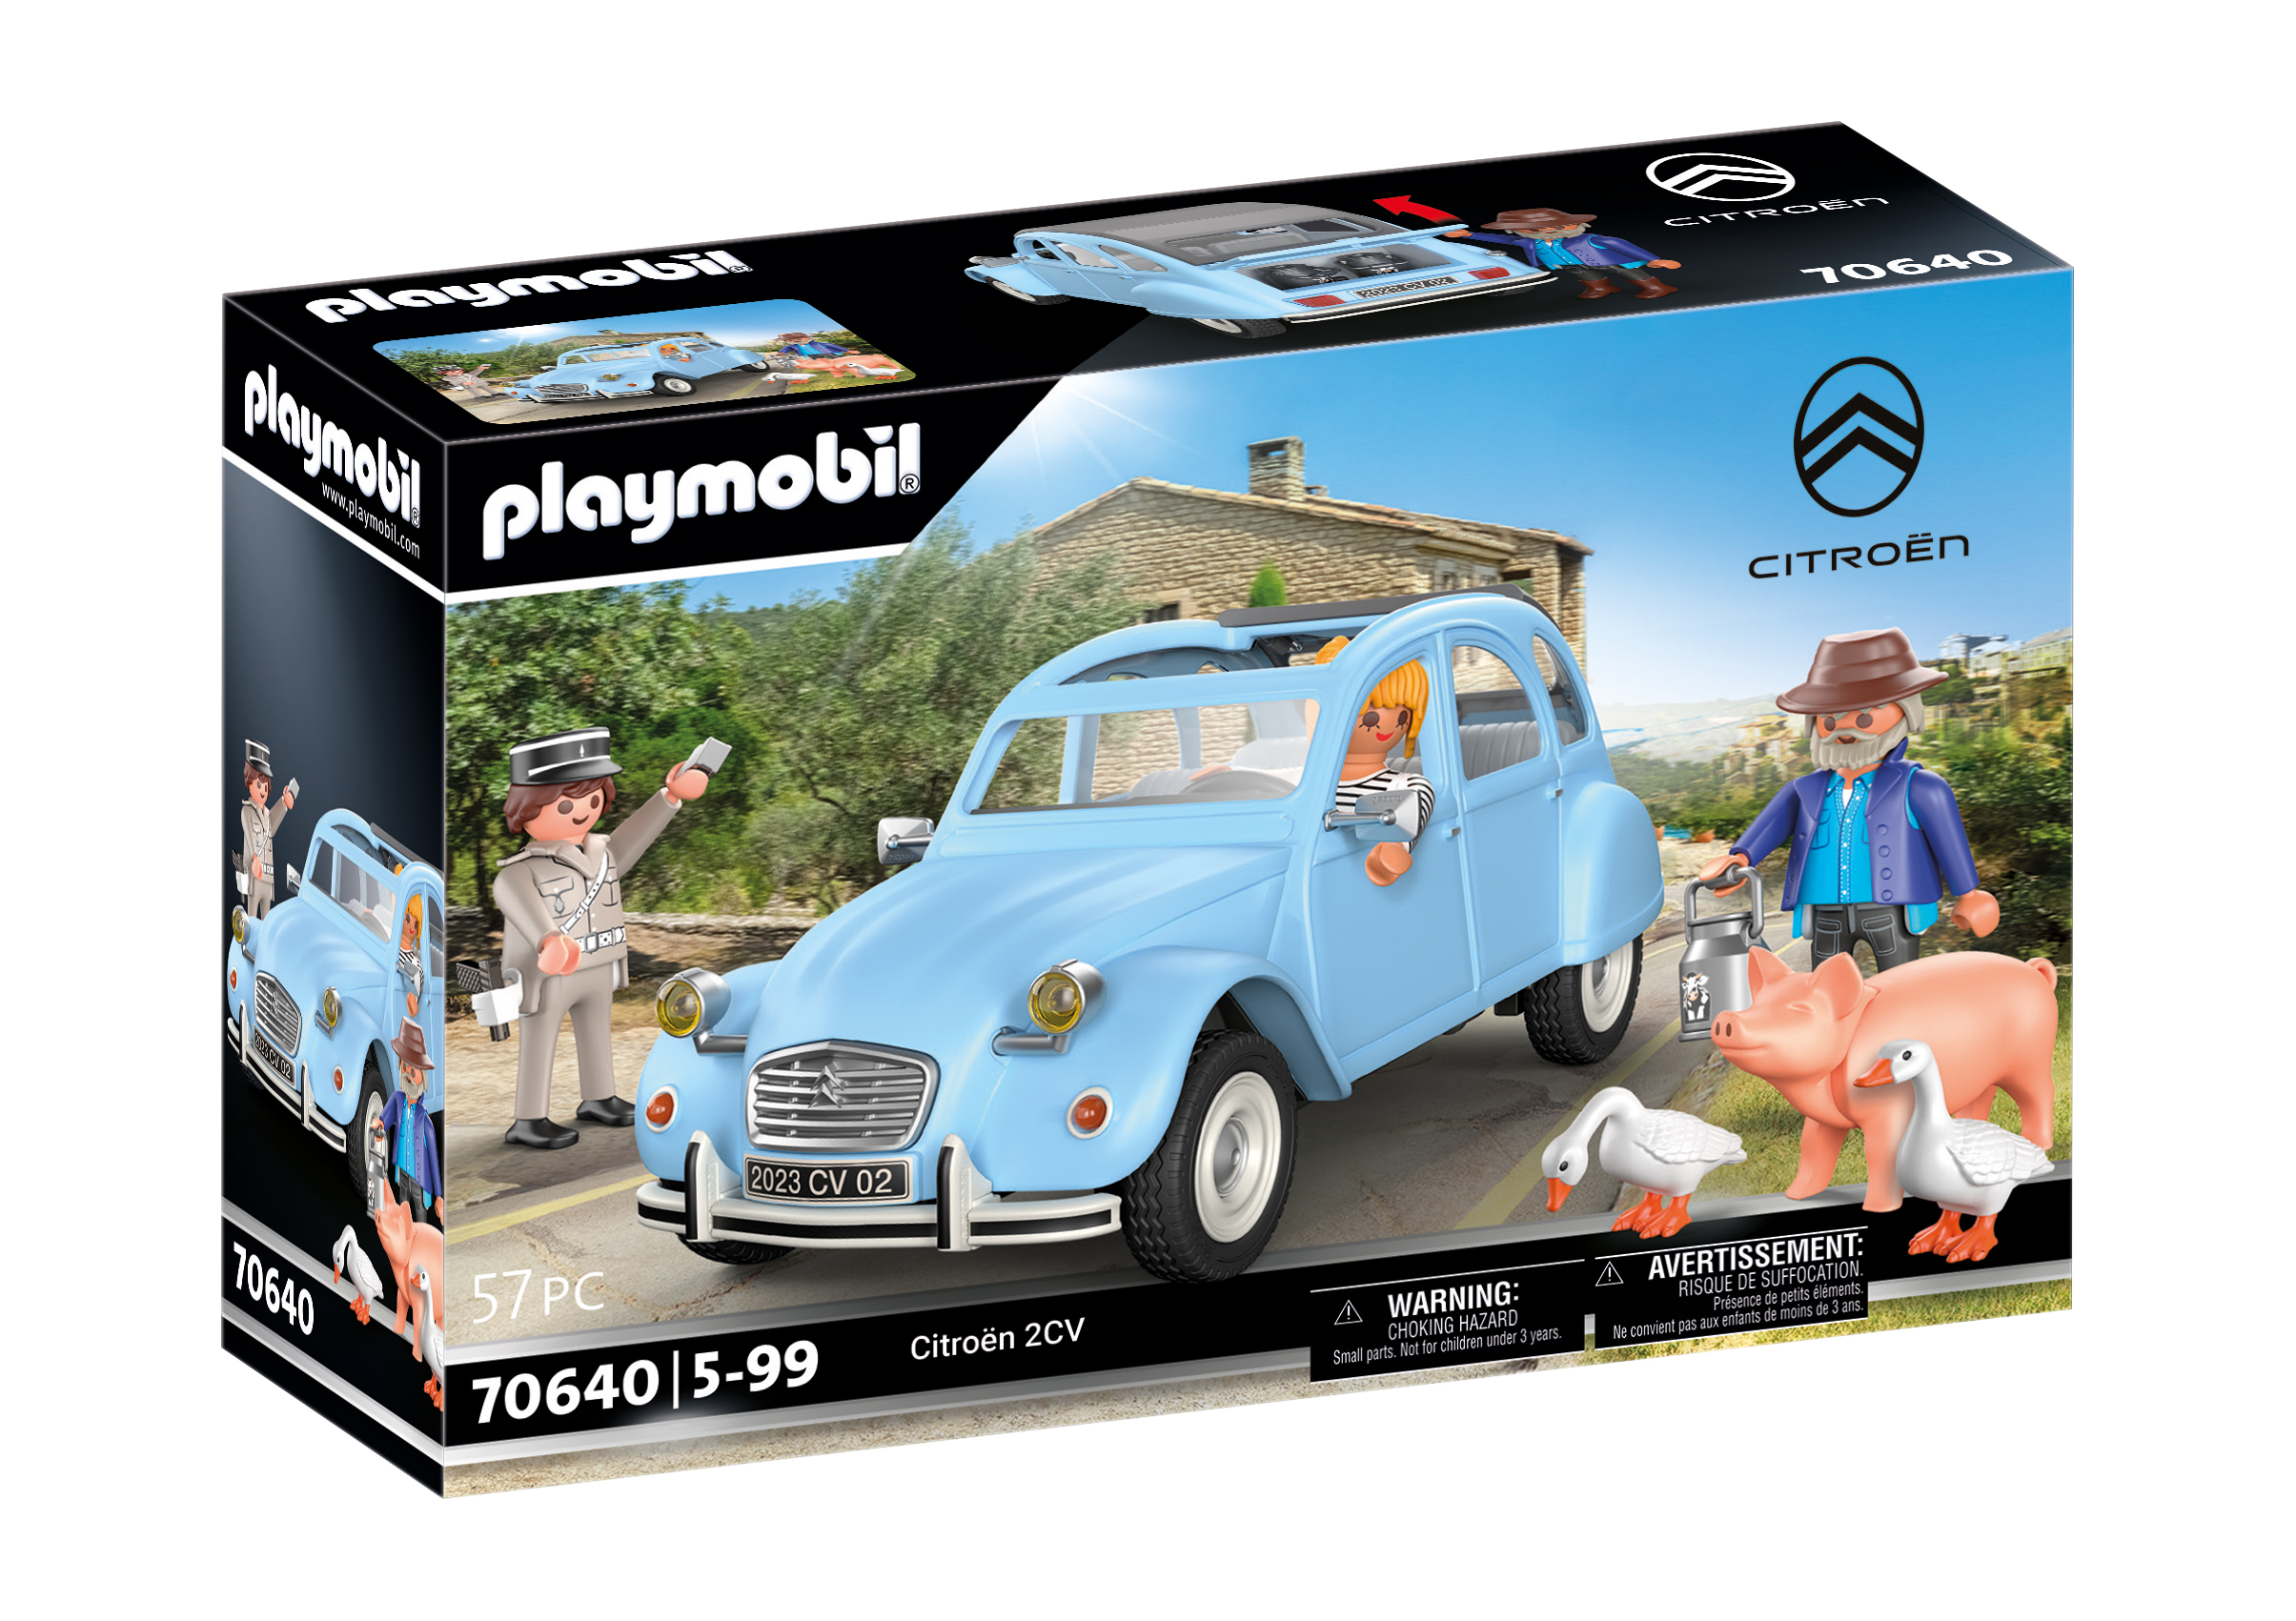 Citroën and Playmobil partner to create the Citroën 2CV Playmobil set